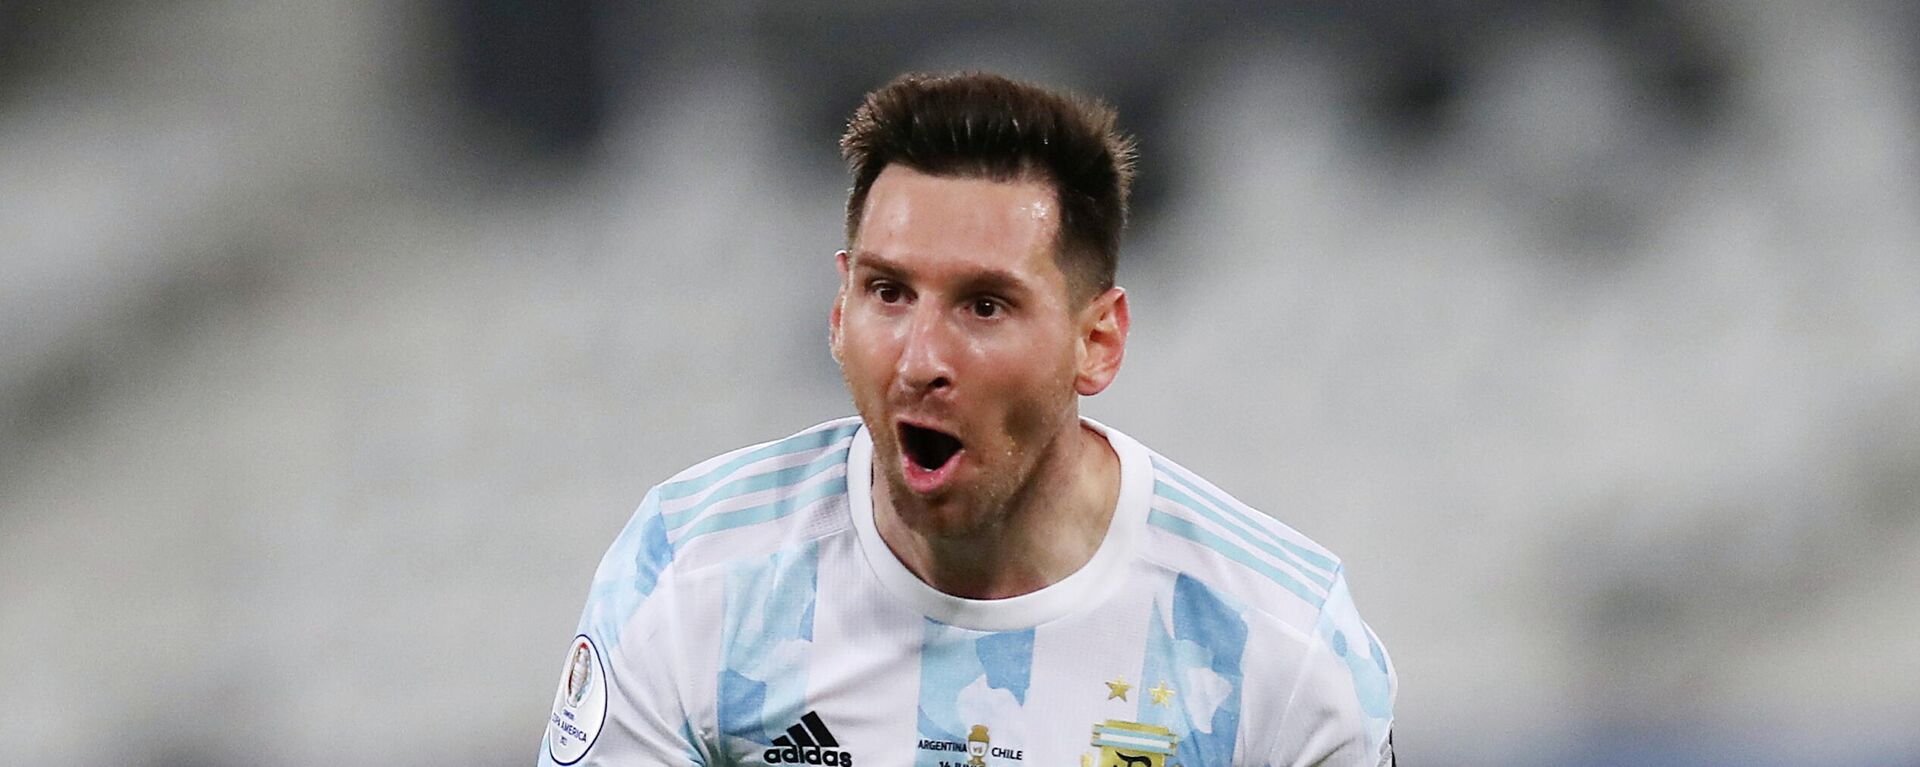 El delantero argentino Lionel Messi durante la Copa América 2021 - Sputnik Mundo, 1920, 18.06.2021